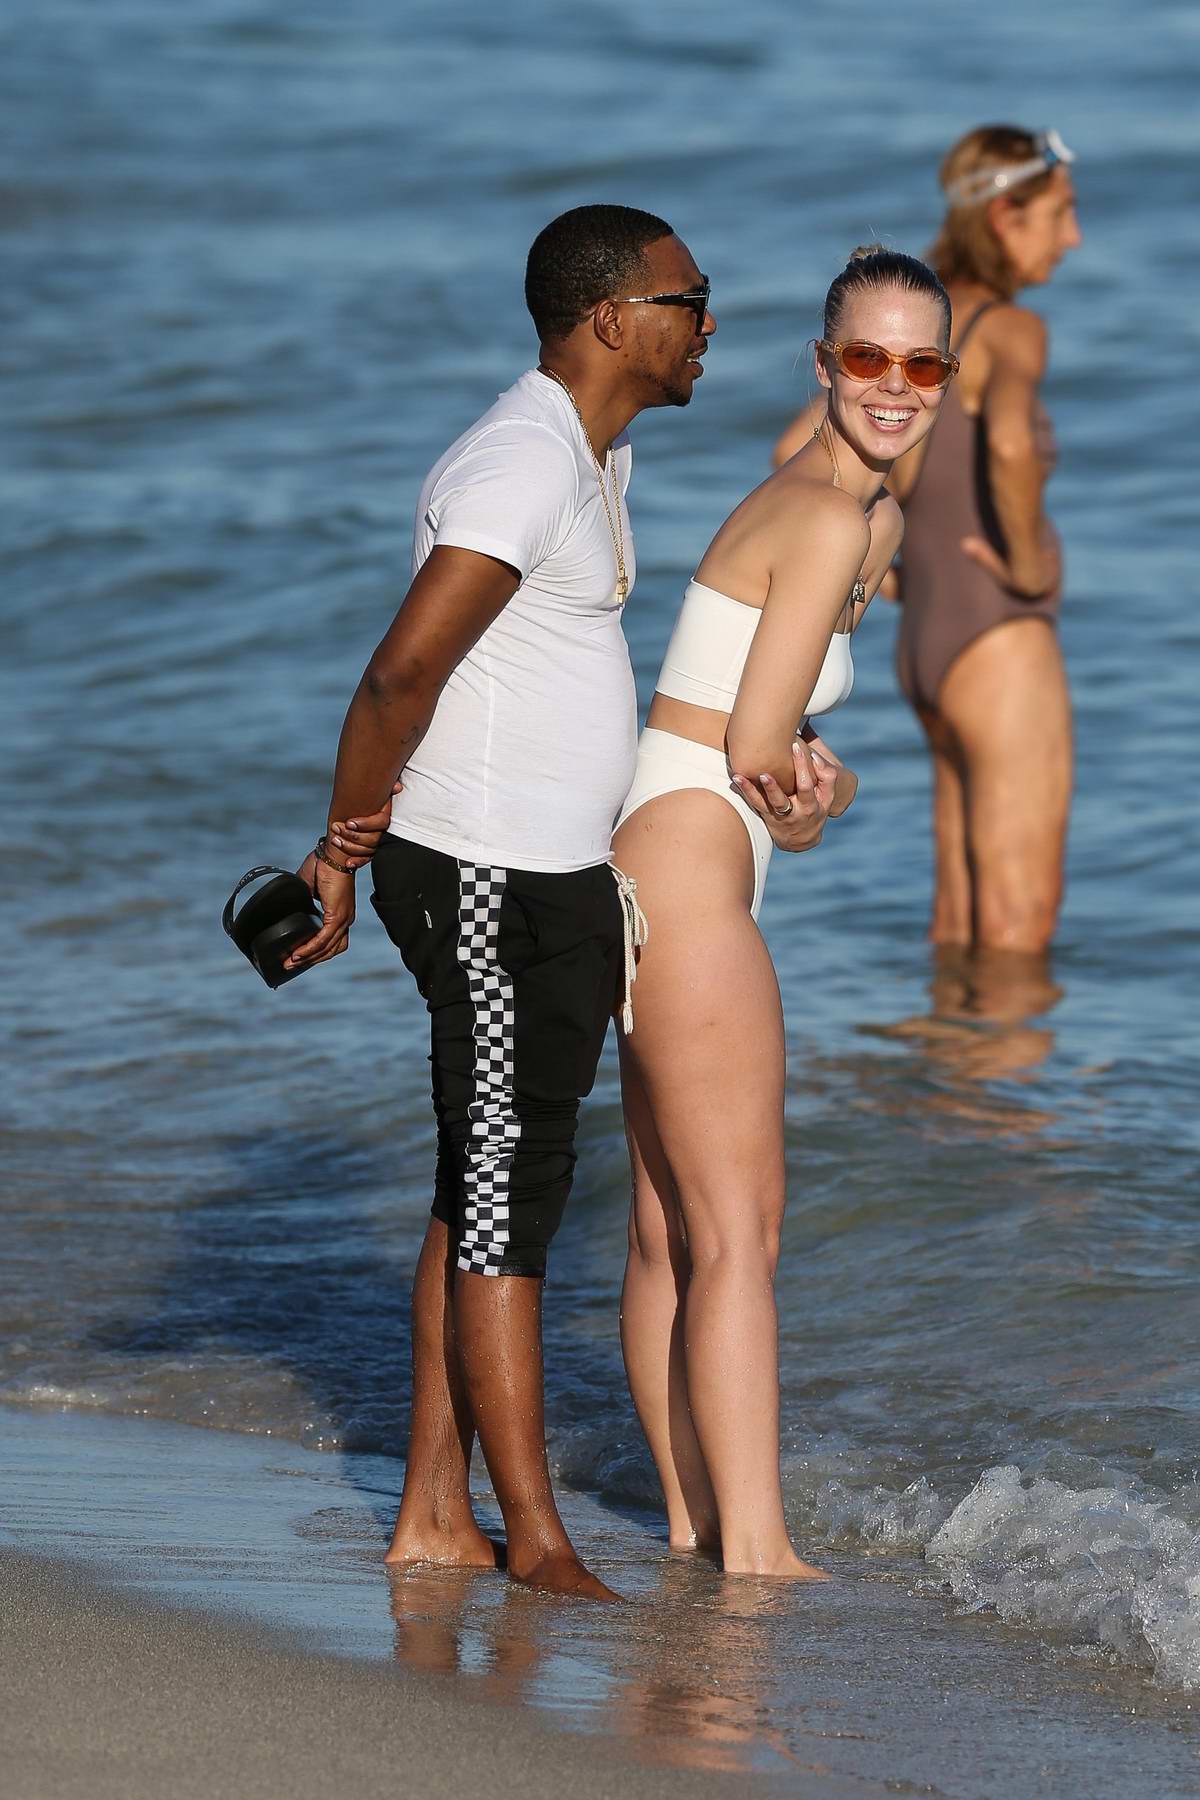 bianca-elouise-in-white-bikini-enjoying-the-beach-with-her-boyfriend-in-miami-191117_4.jpg